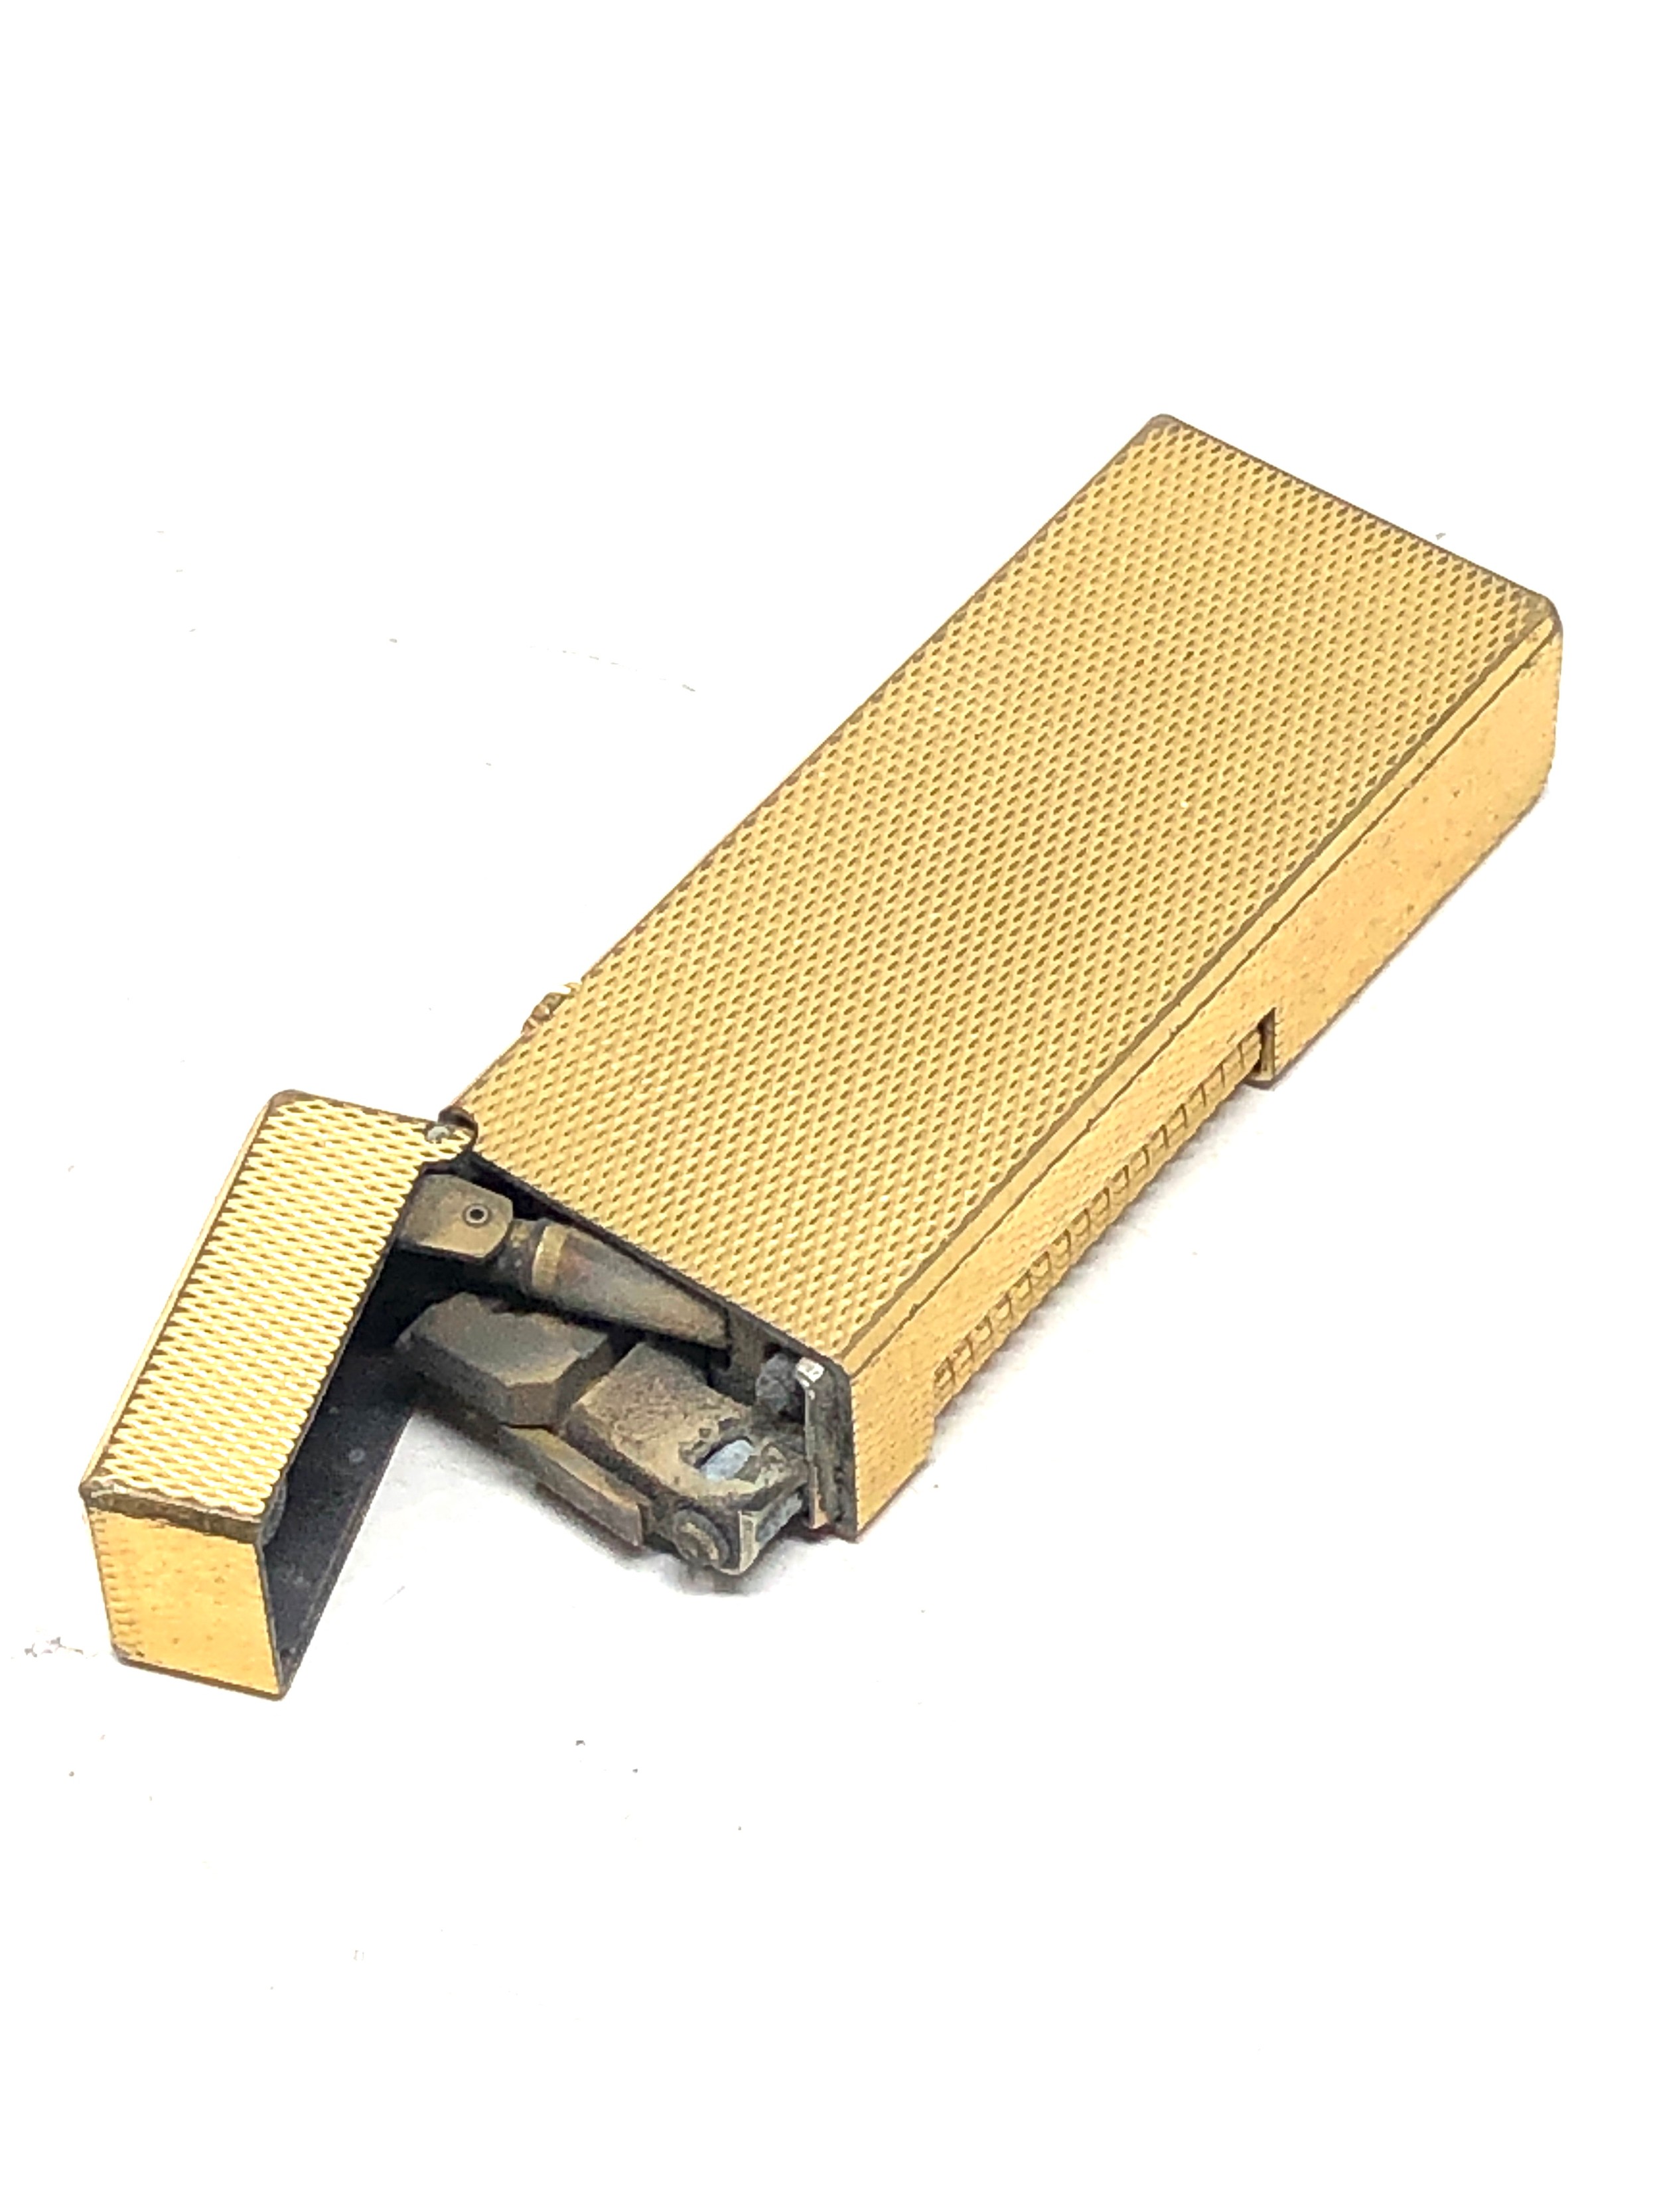 Dunhill cigarette lighter - Image 2 of 3